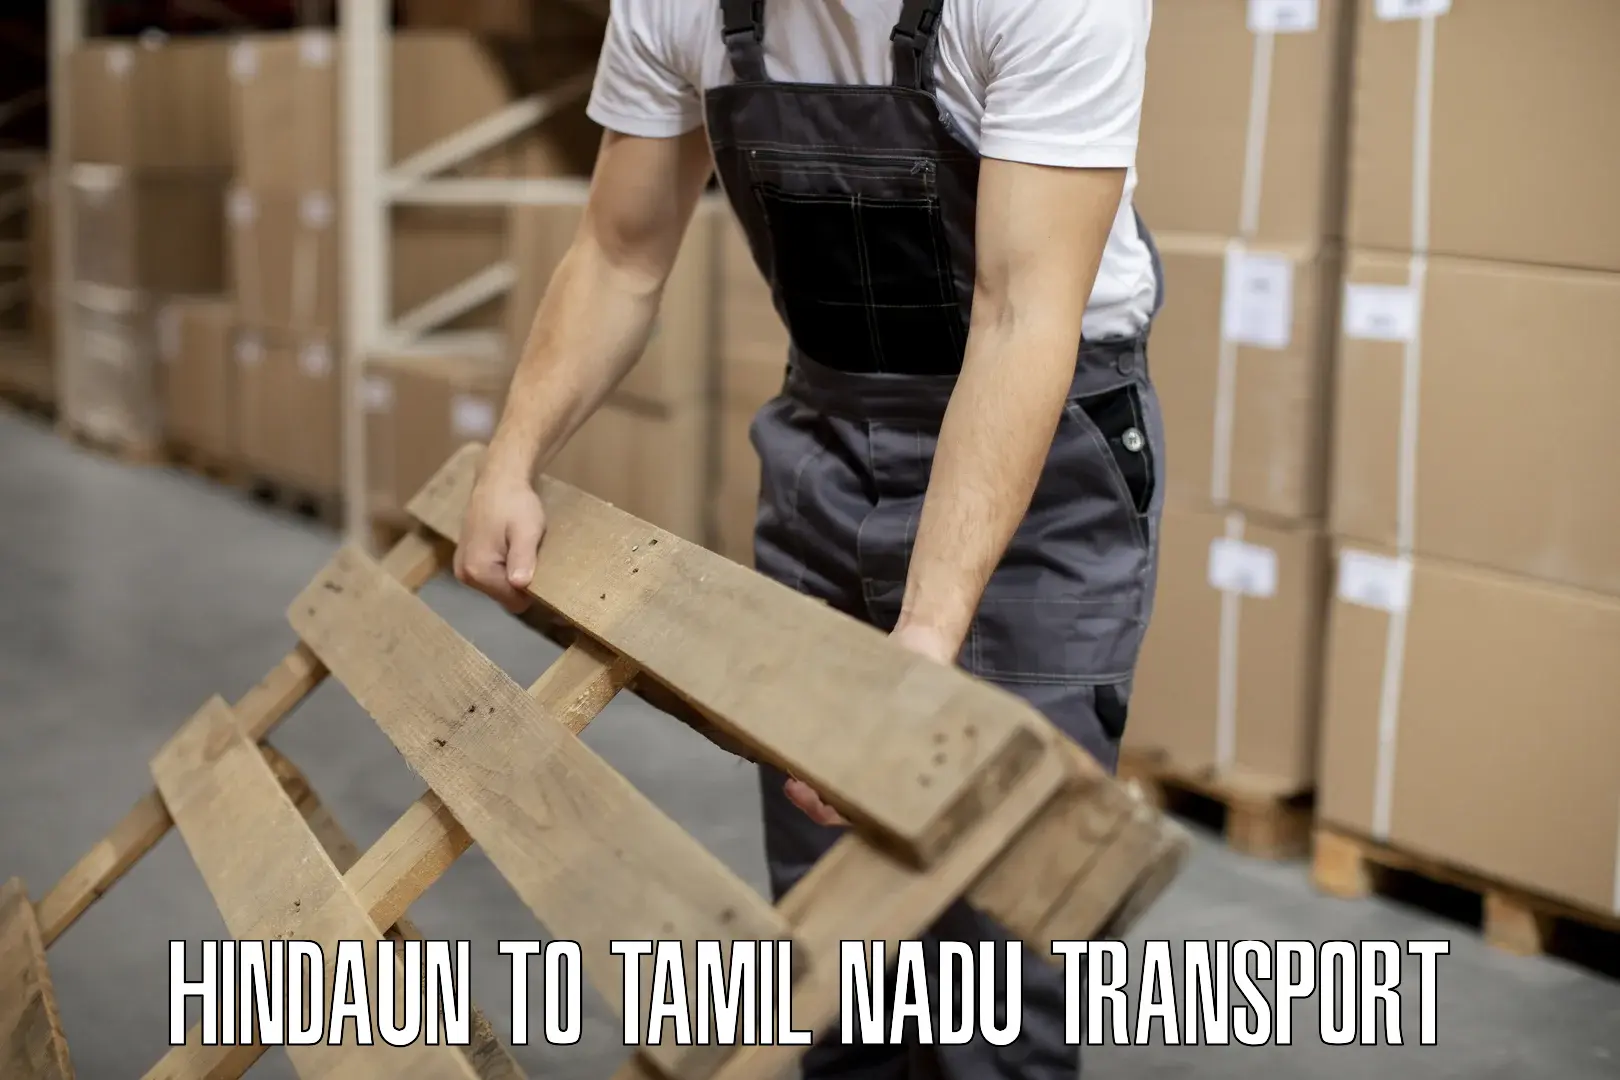 Daily transport service Hindaun to Tamil Nadu